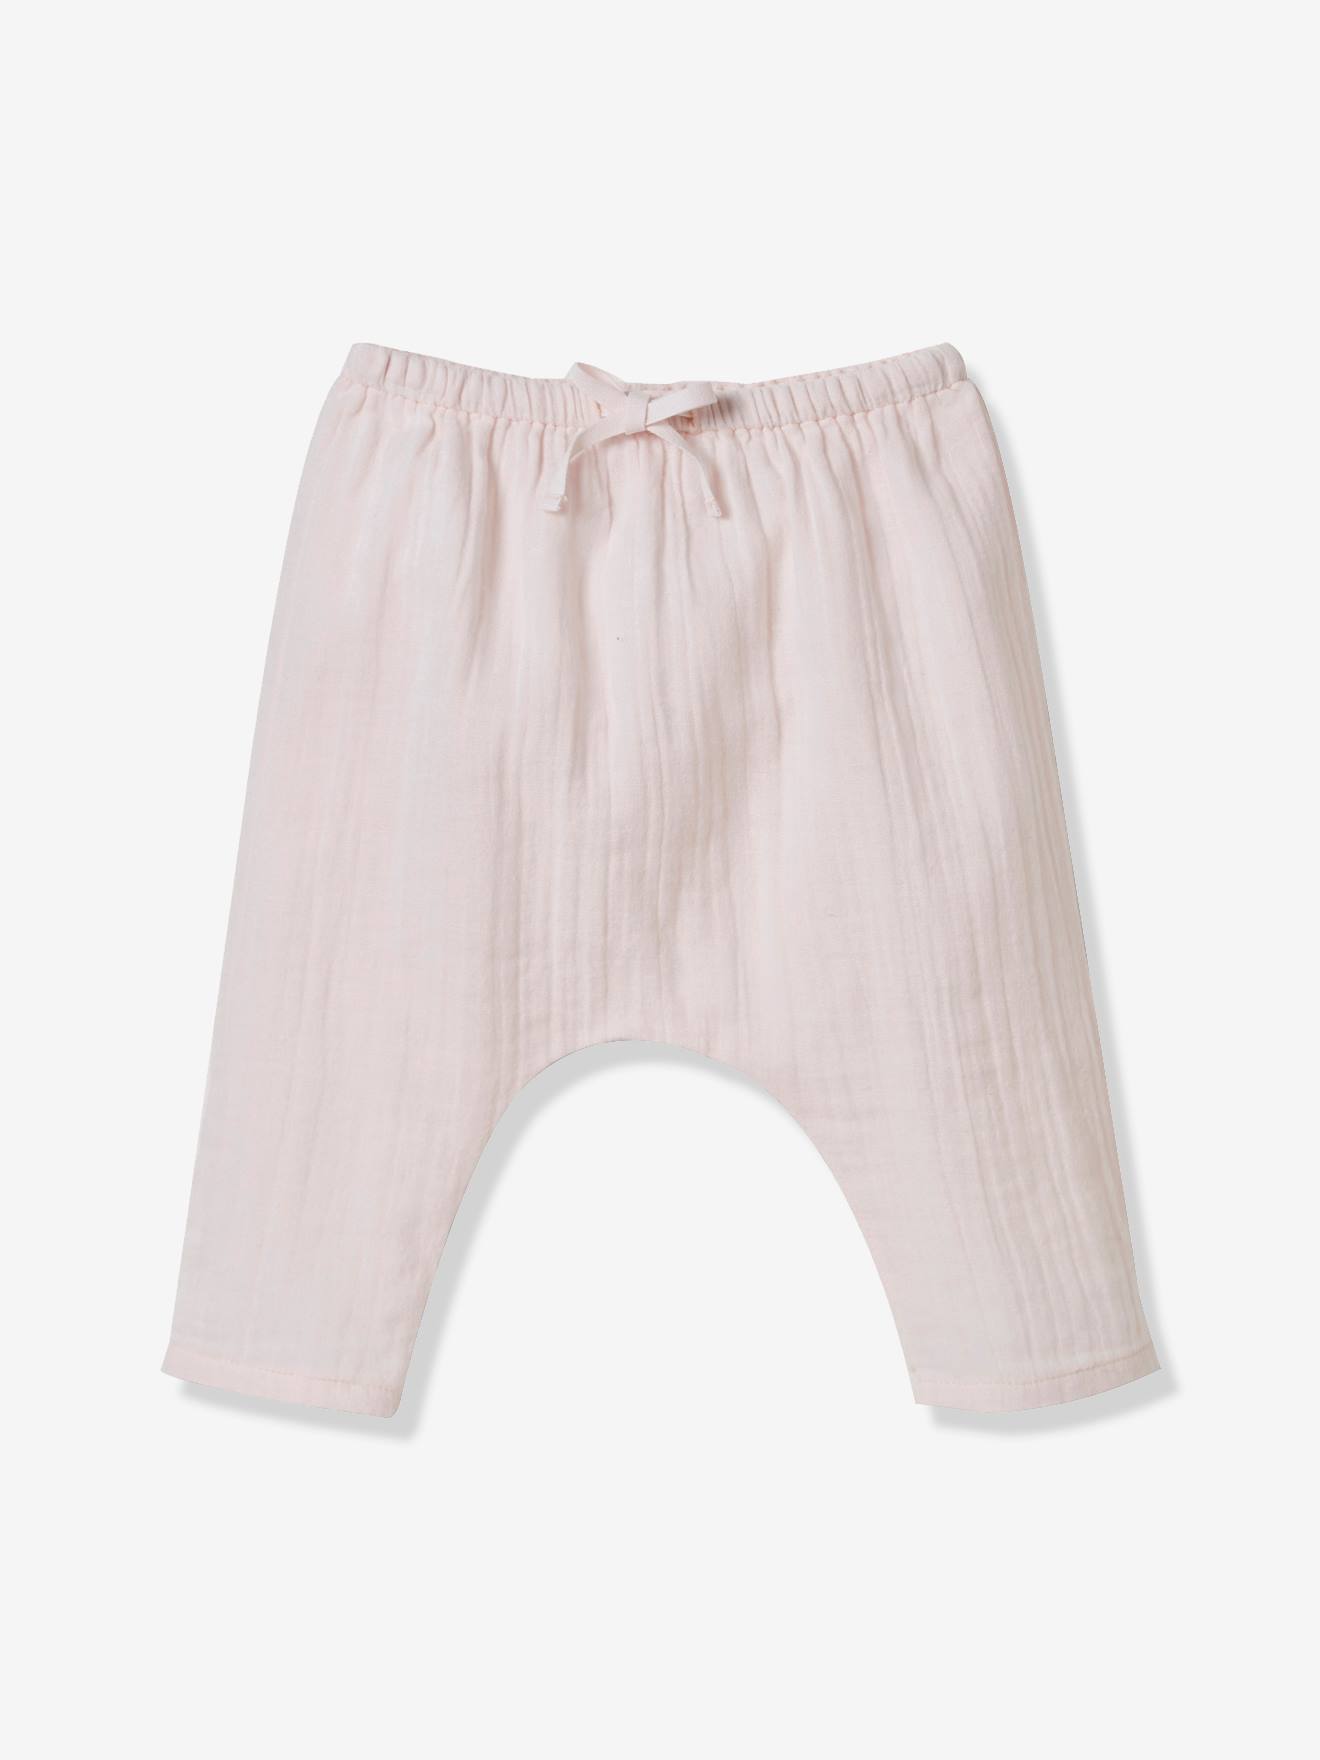 Pantalon sarouel bébé rose pâle